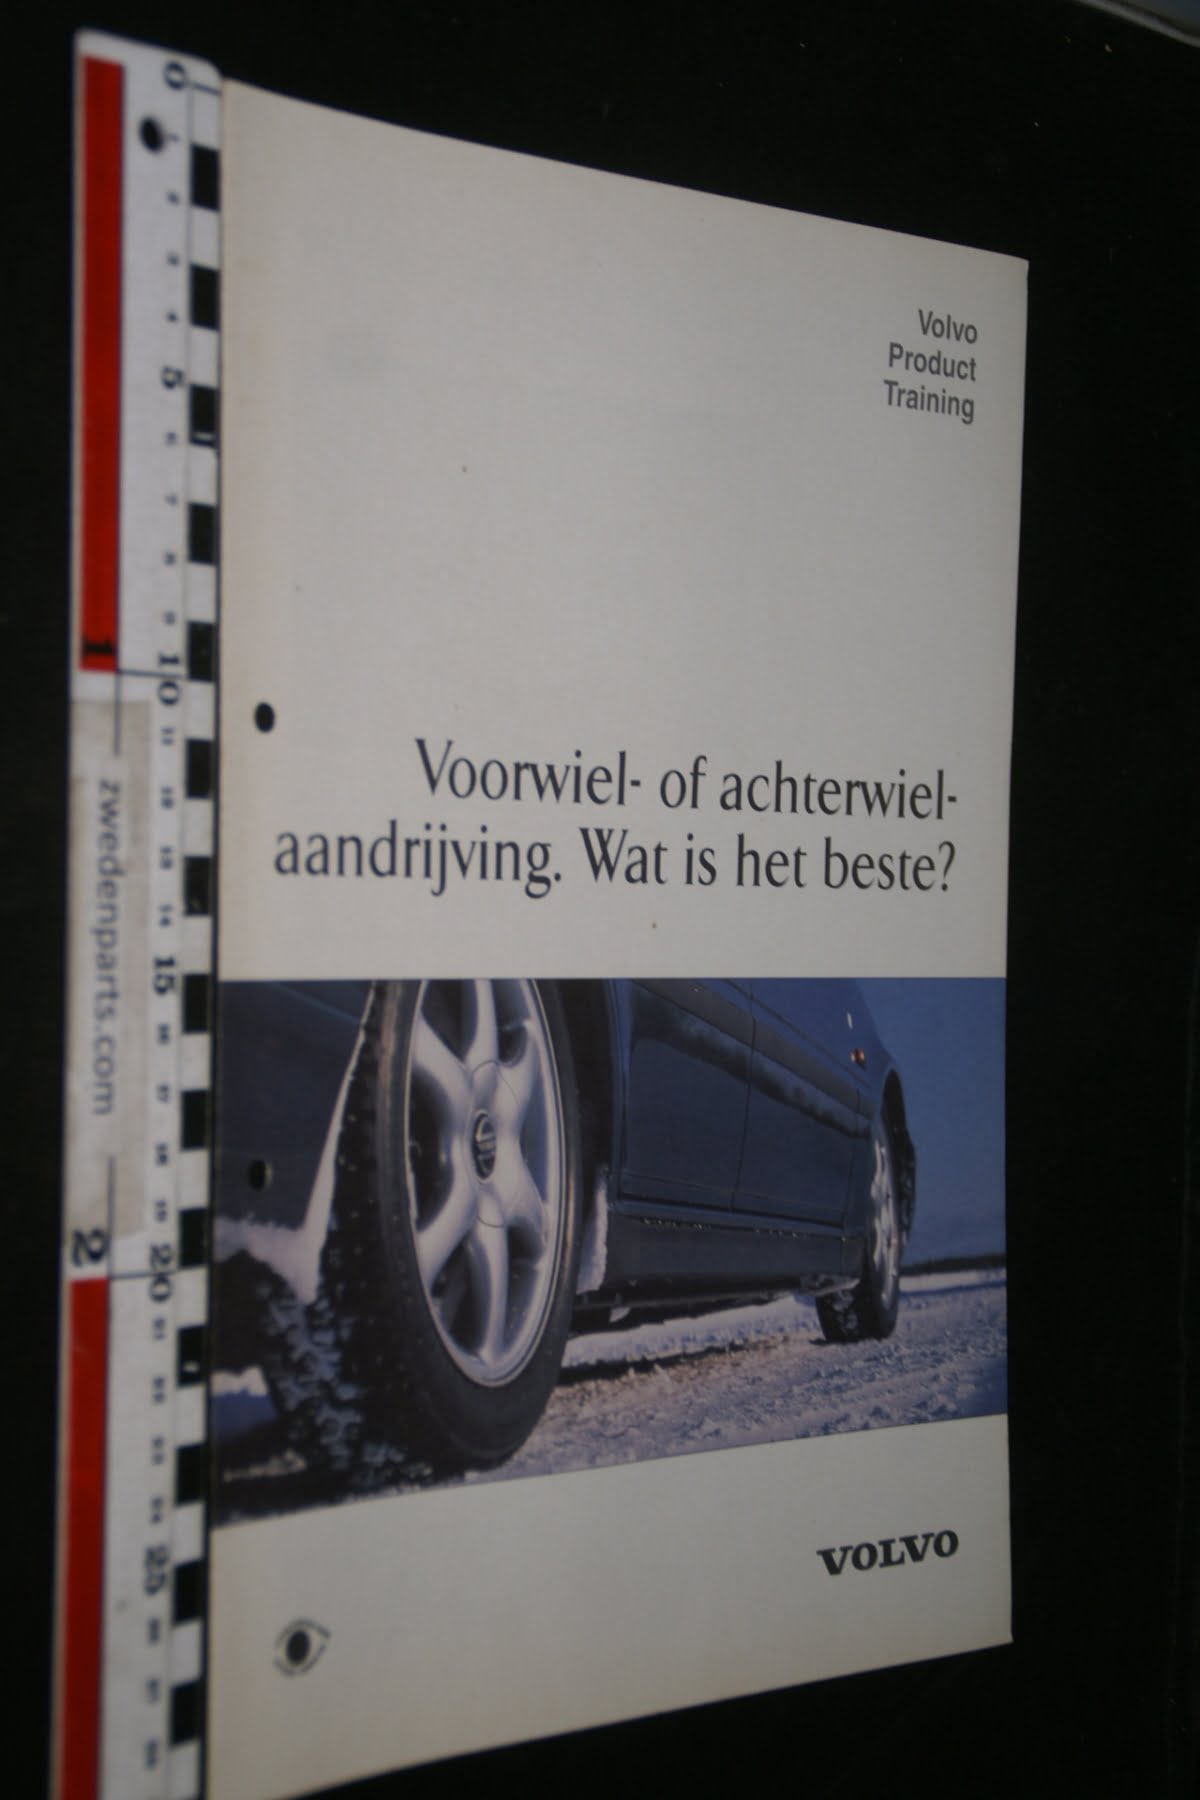 DSC02939 1995 brochure origineel Volvo Product Training voorwiel of achterwielaandrijving nr PV 523-31336-9be46e9f